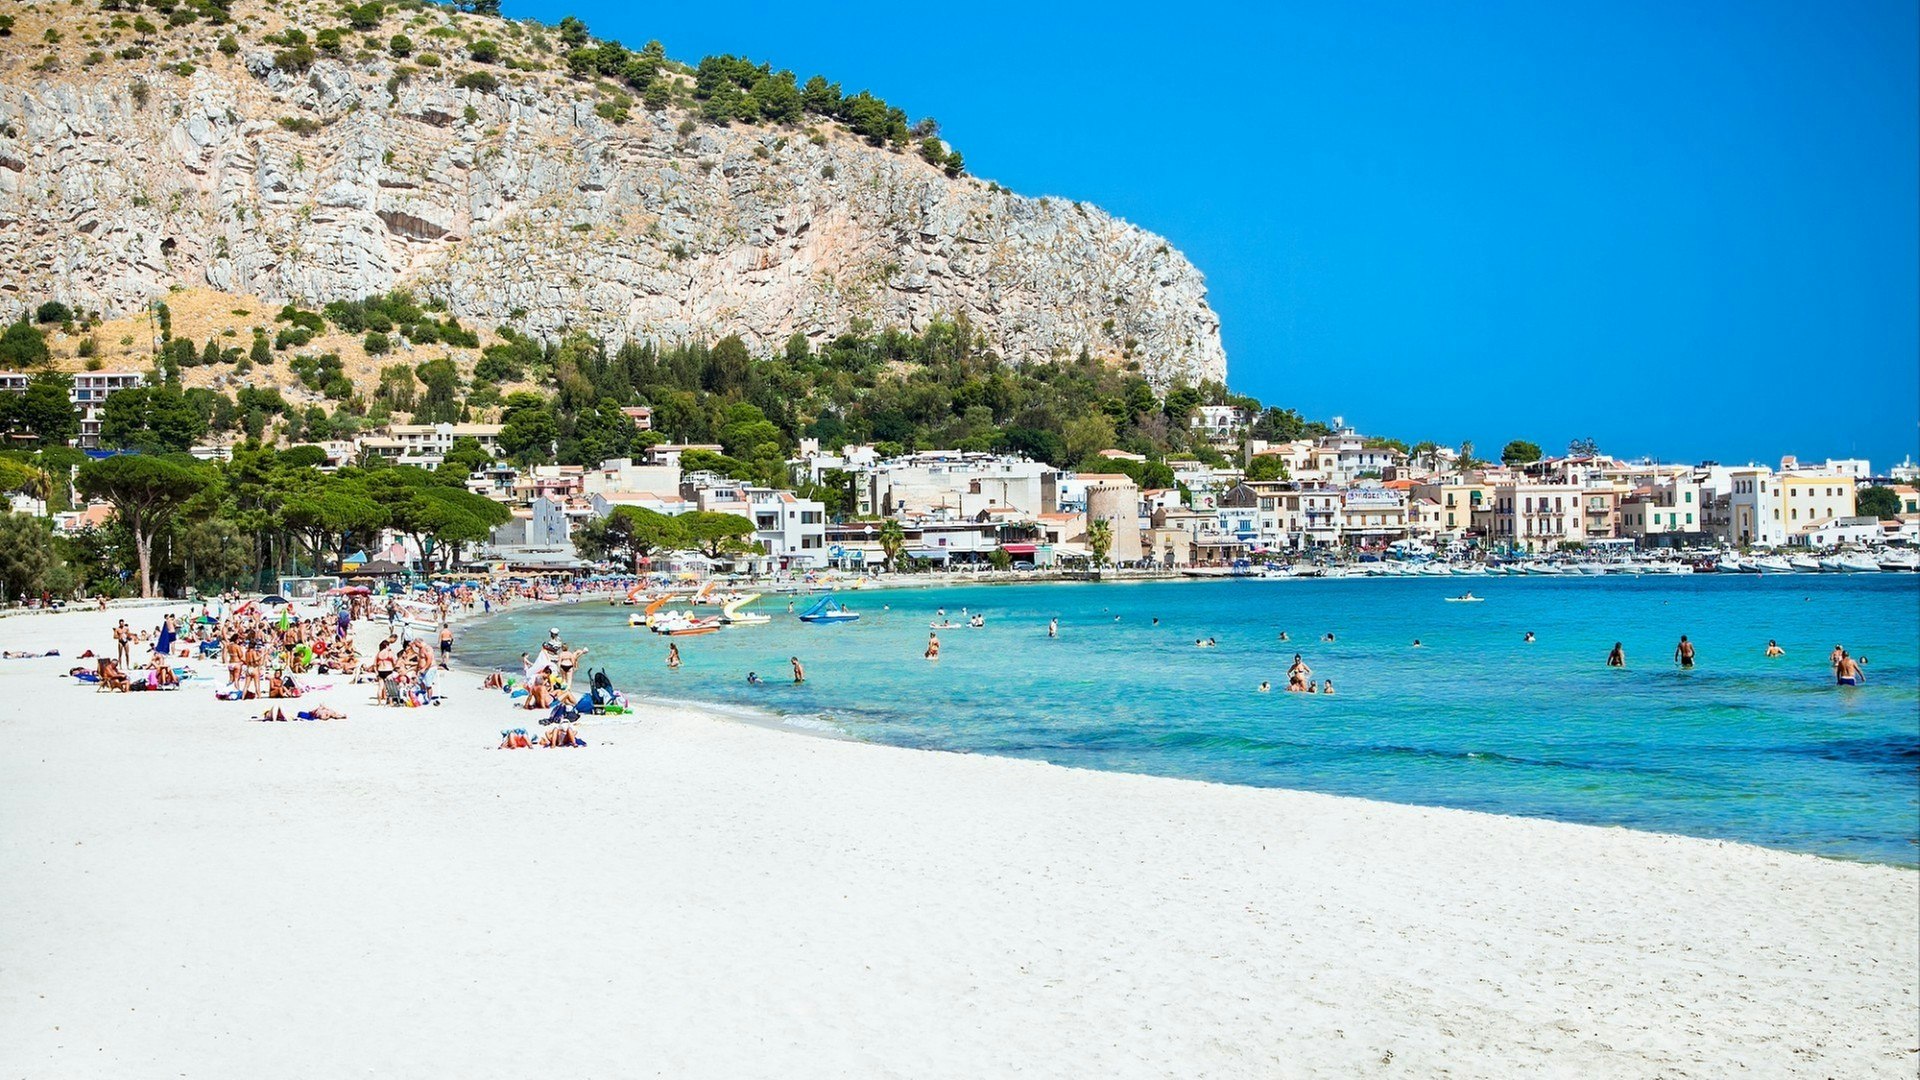 Mondello white sand beach in Palermo, Sicily. Italy.